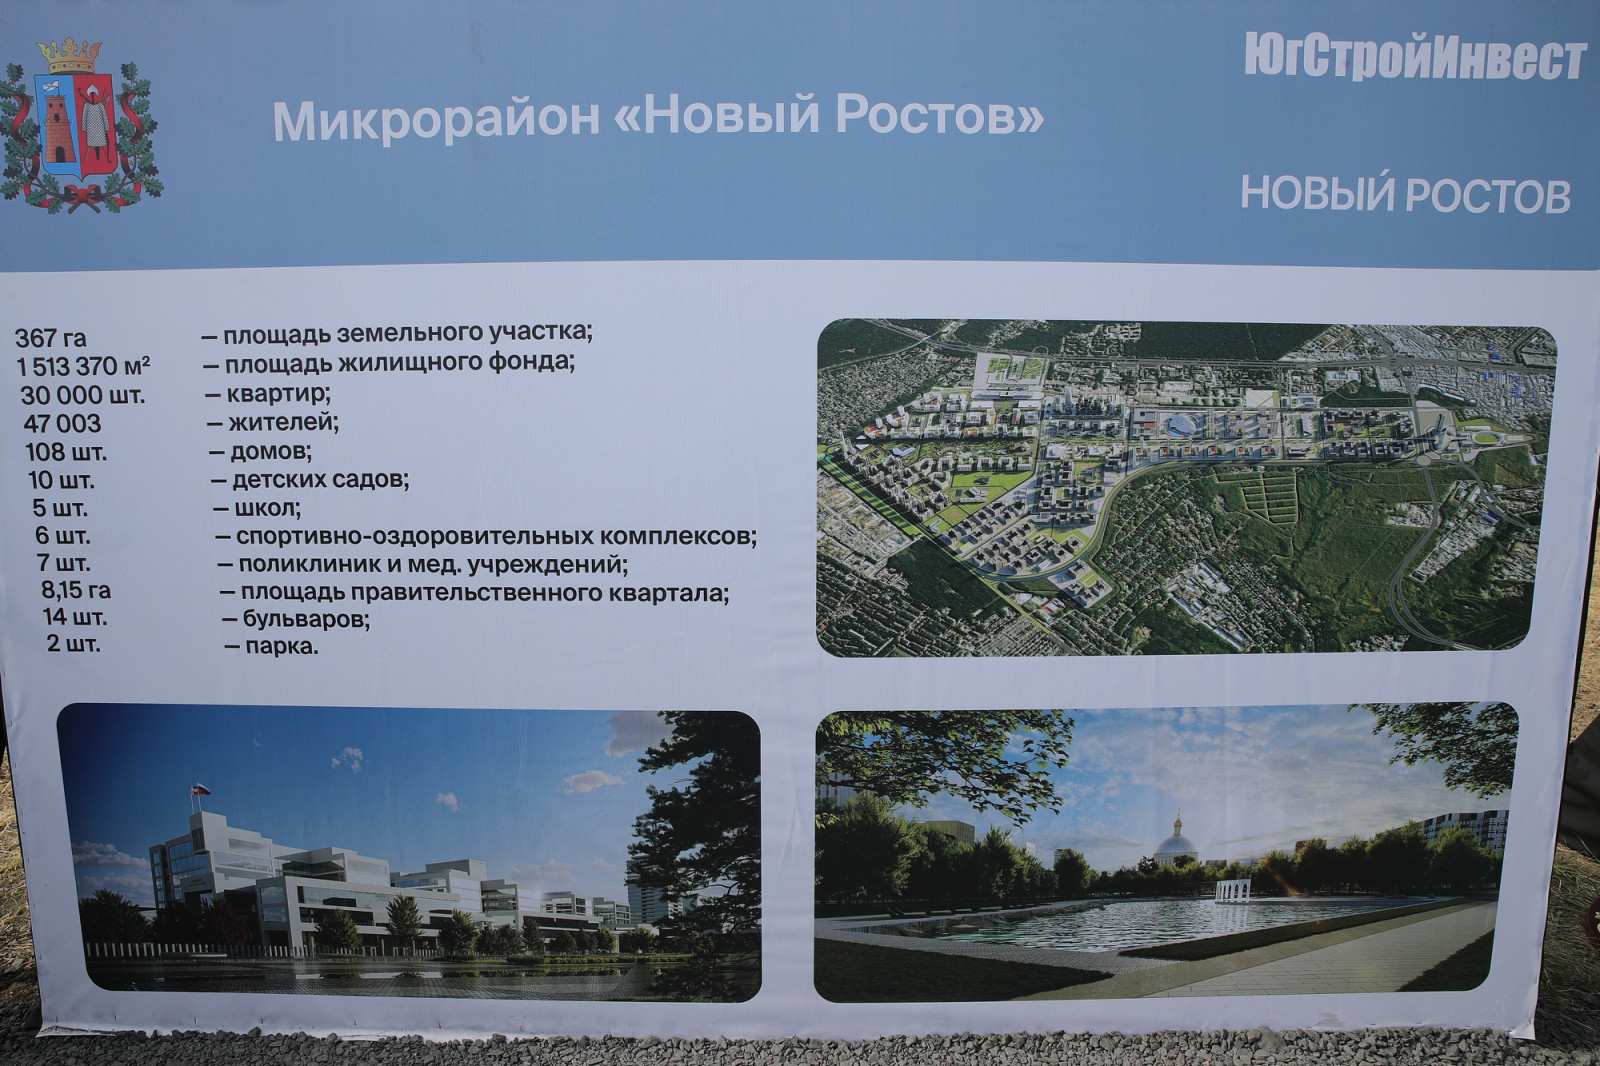 Акустический центр за 10 млрд рублей построят на месте старого аэропорта Ростова - фото 1